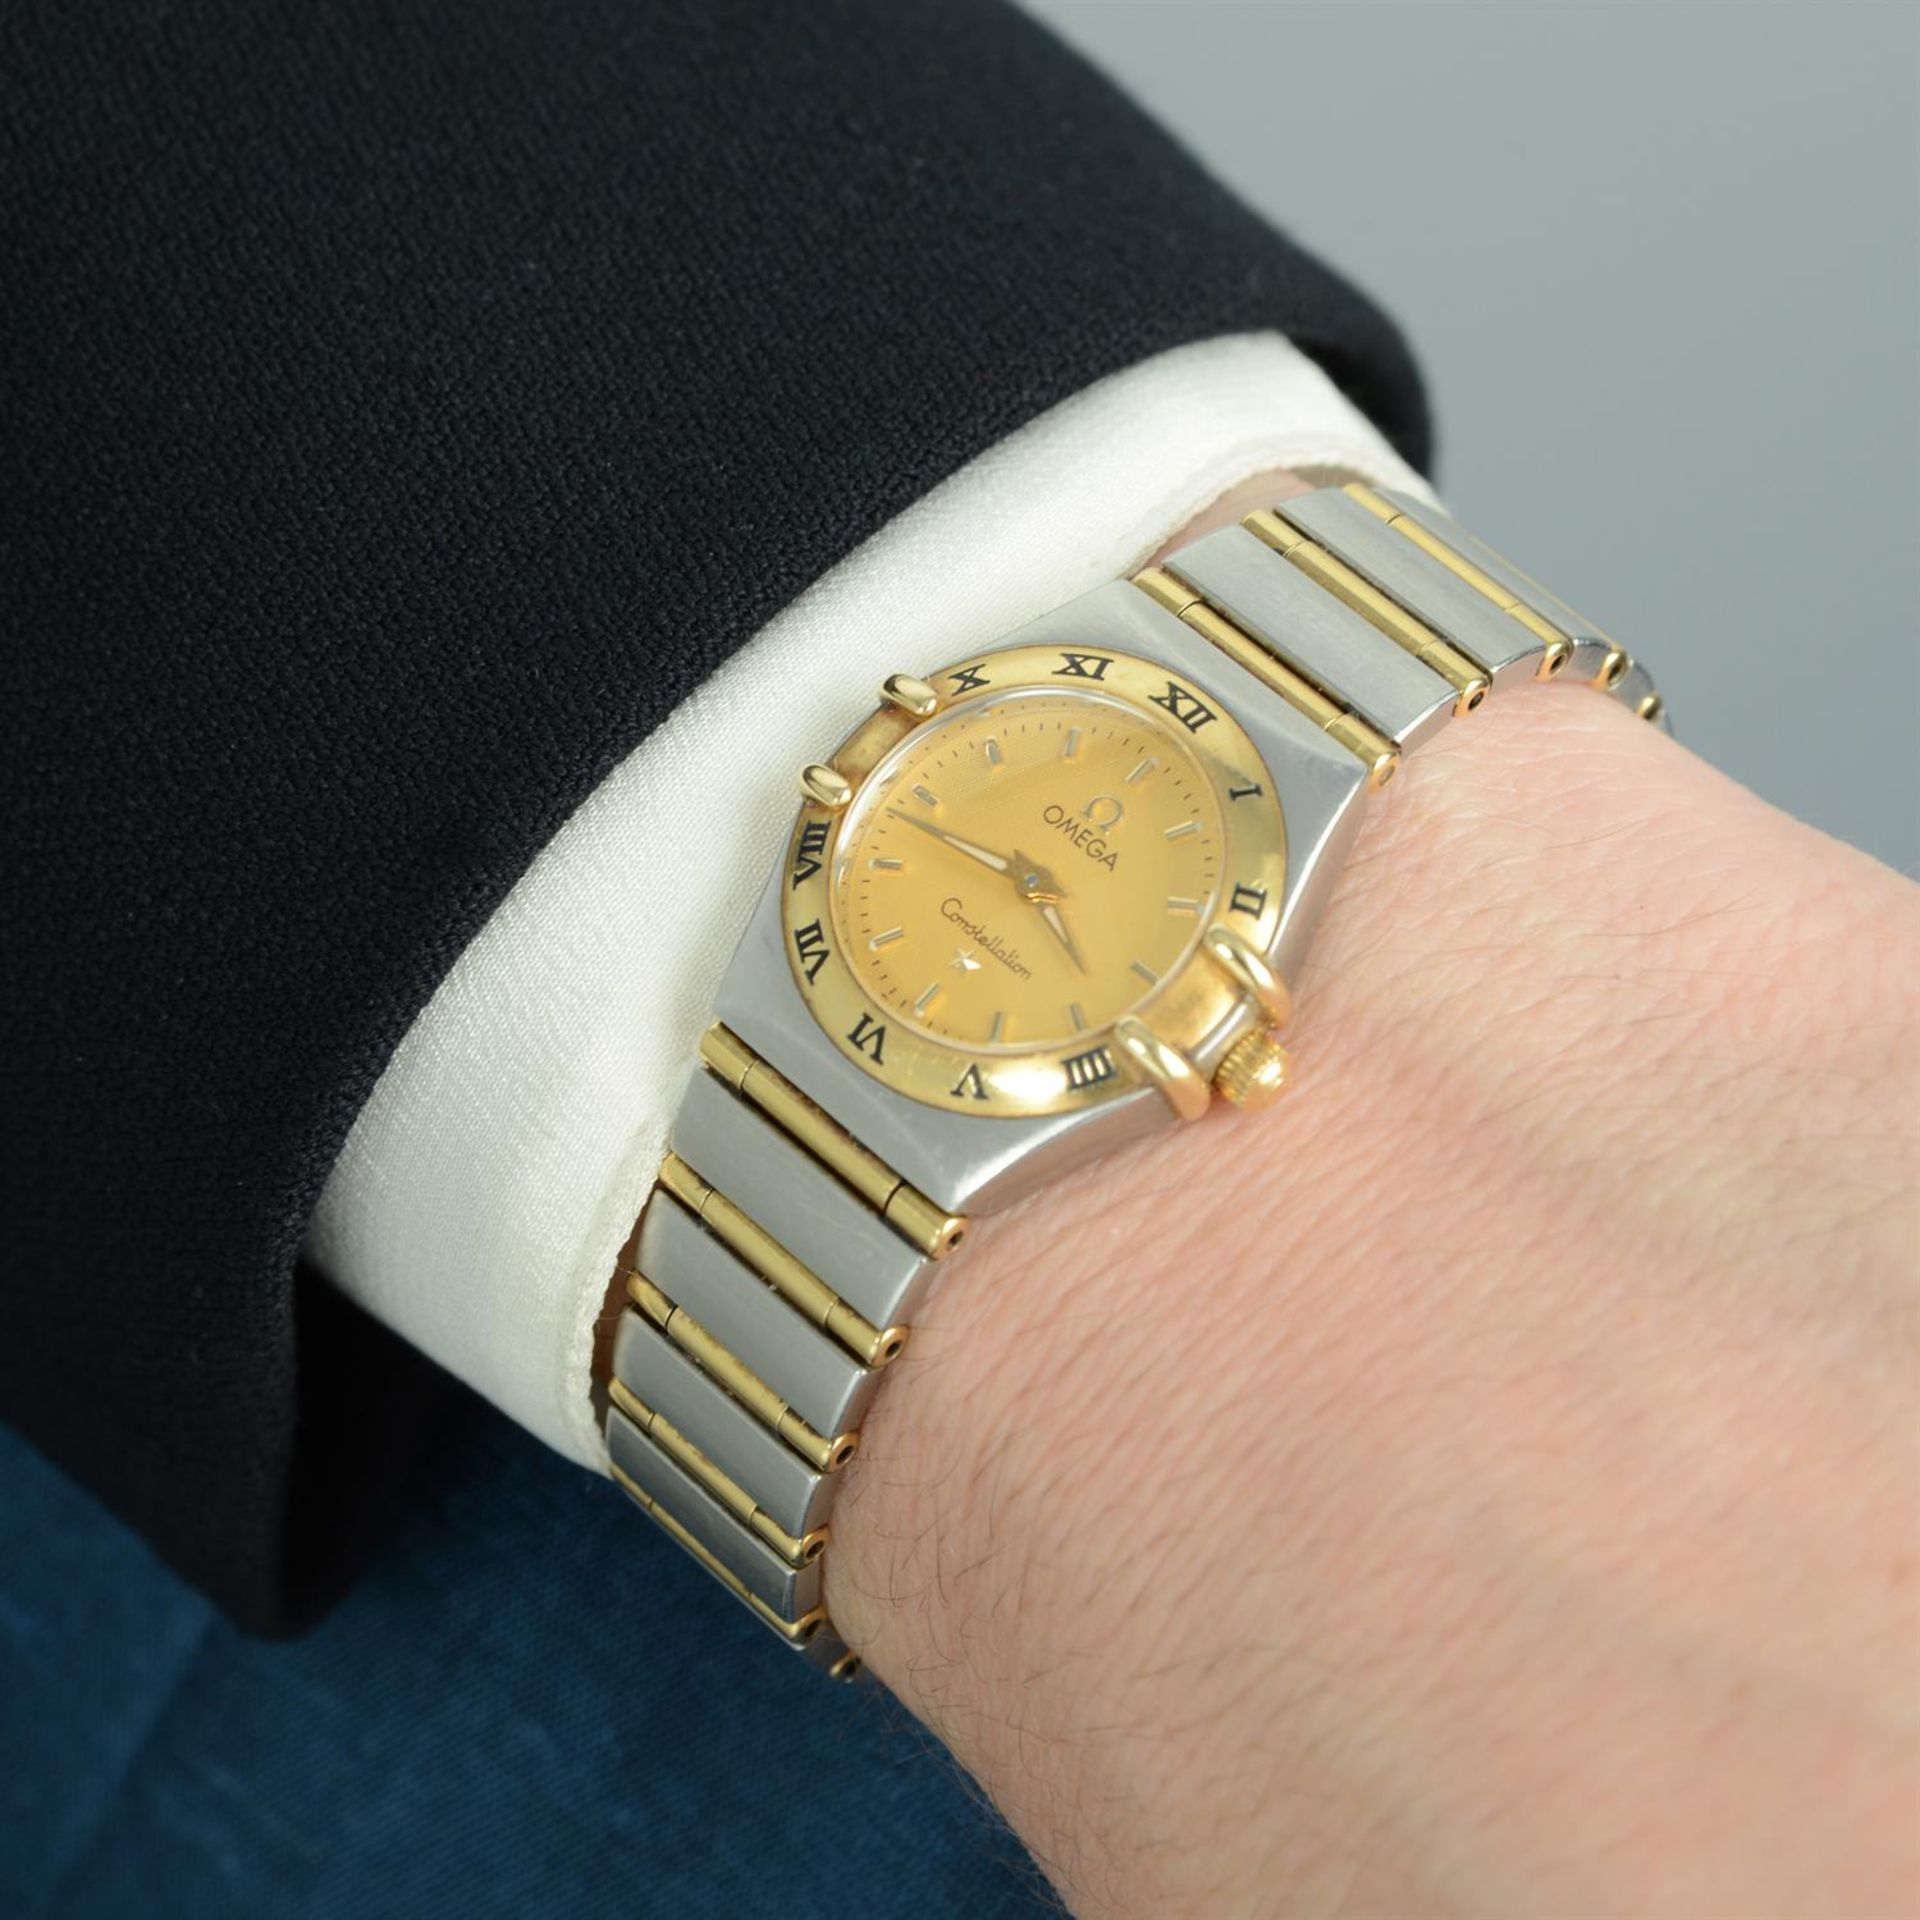 OMEGA - a bi-metal Constellation bracelet watch, 22mm. - Image 5 of 5